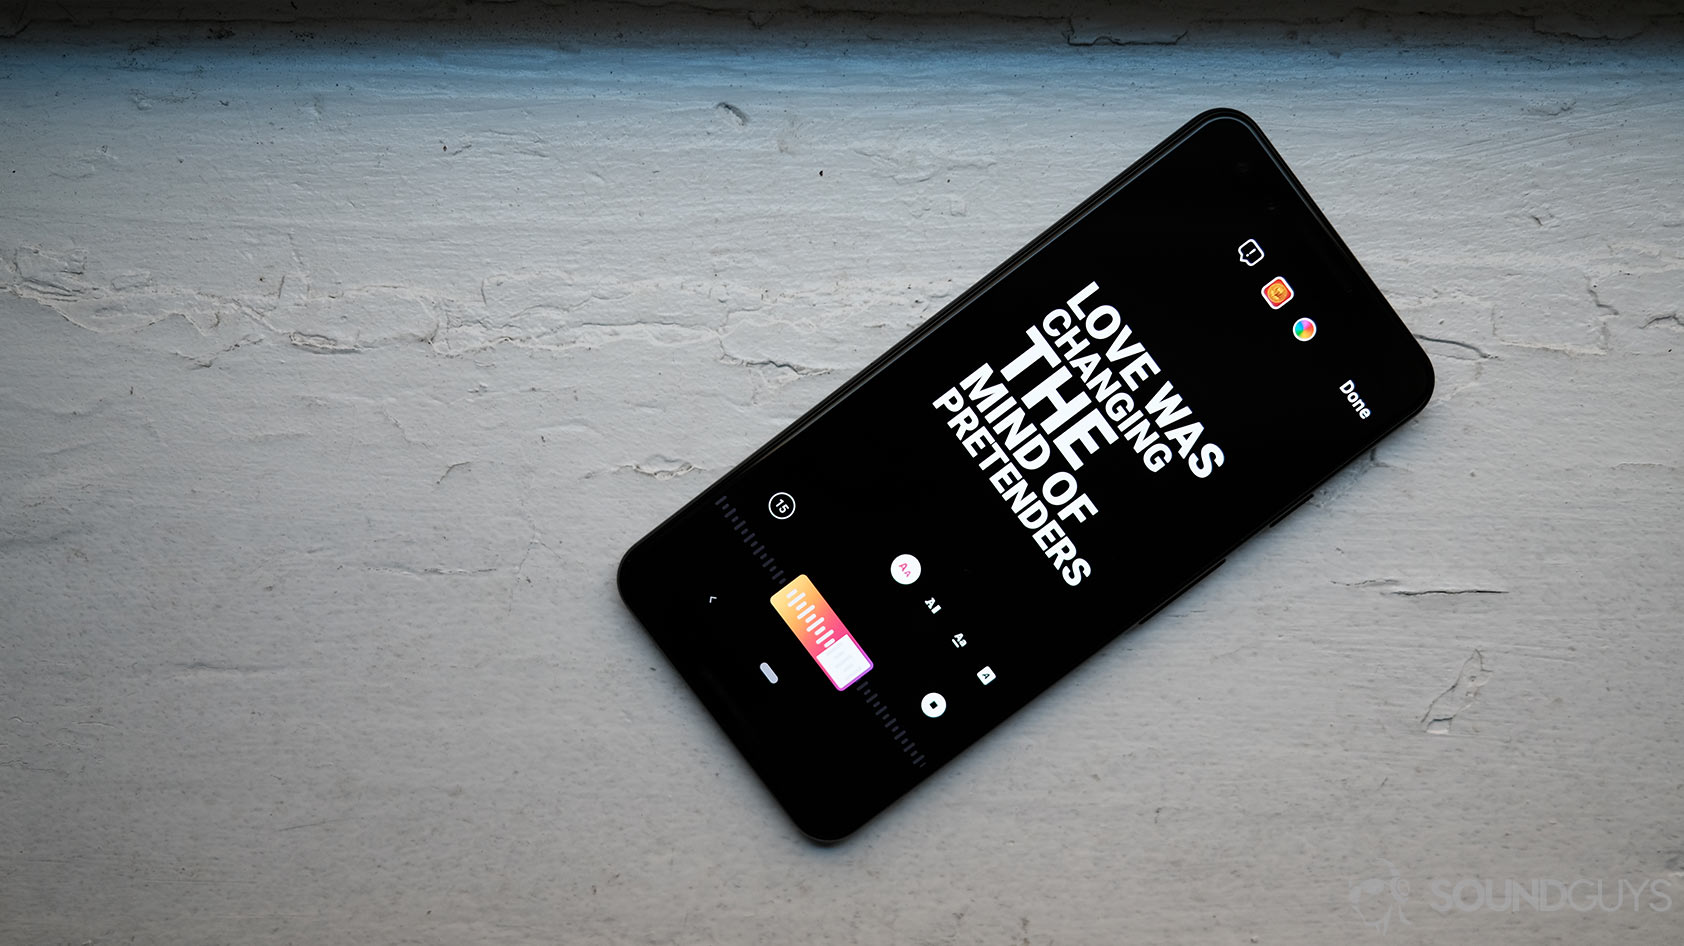 A Google Pixel 3 smartphone displays the Instagram stories feature song lyrics.